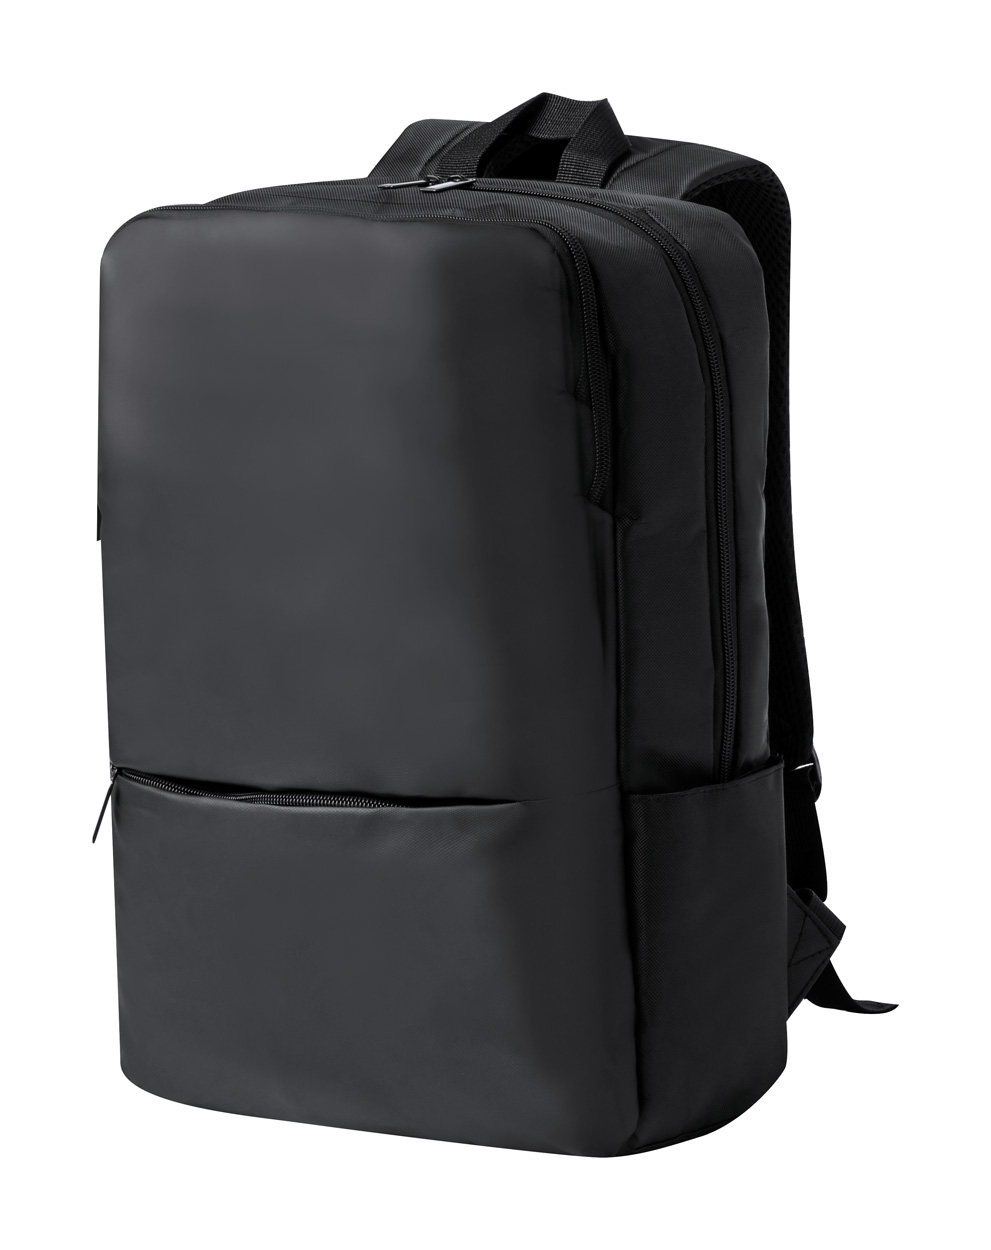 Sarek backpack Black